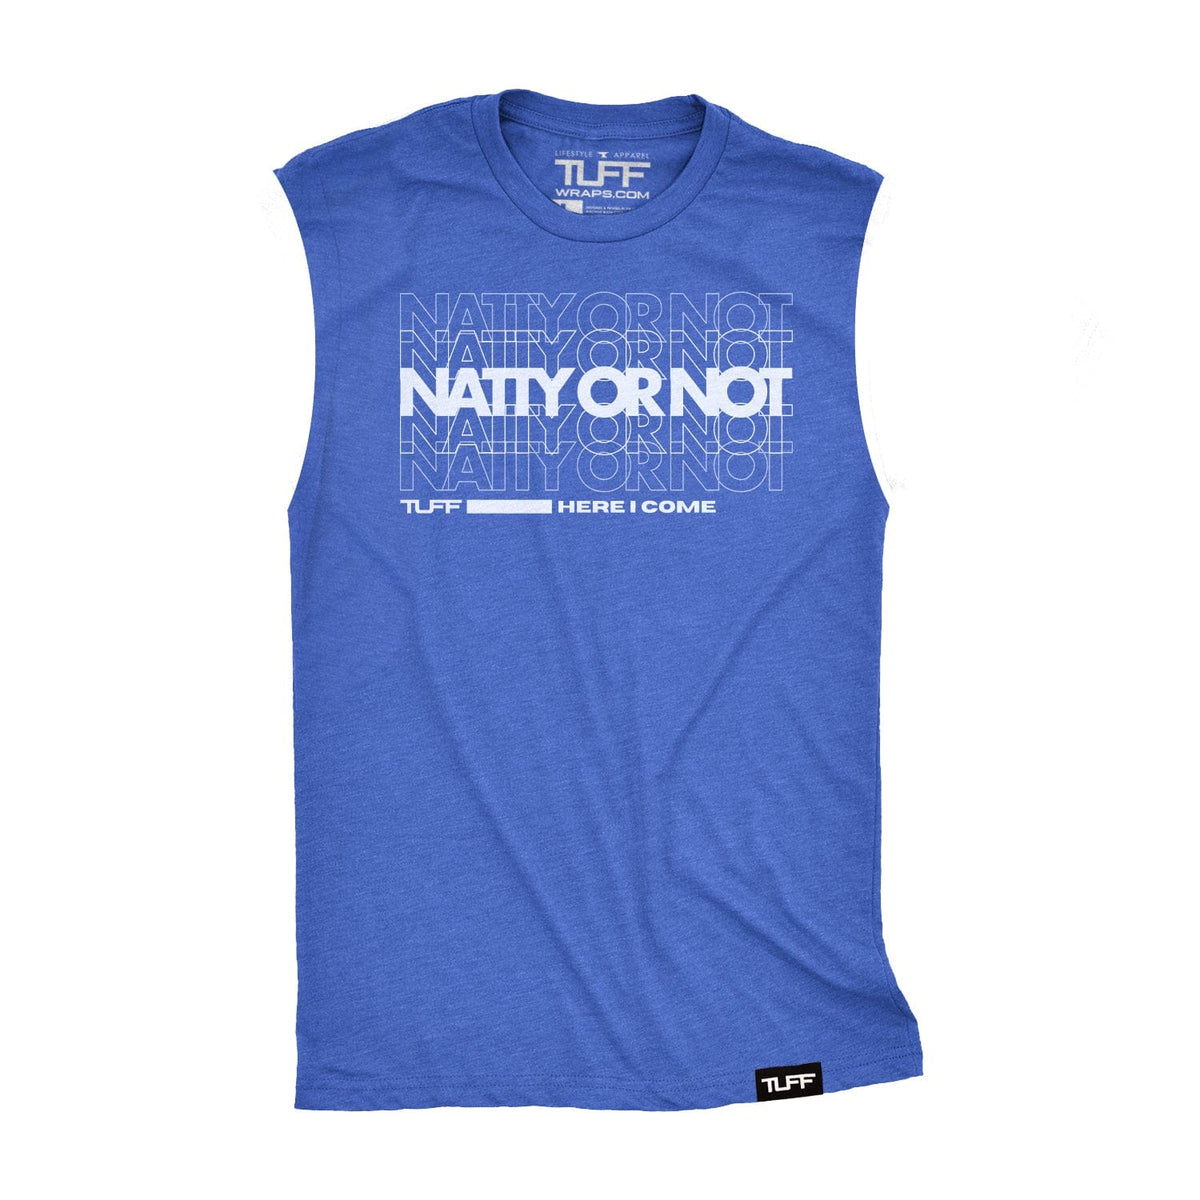 Natty Or Not Raw Edge Muscle Tank TuffWraps.com